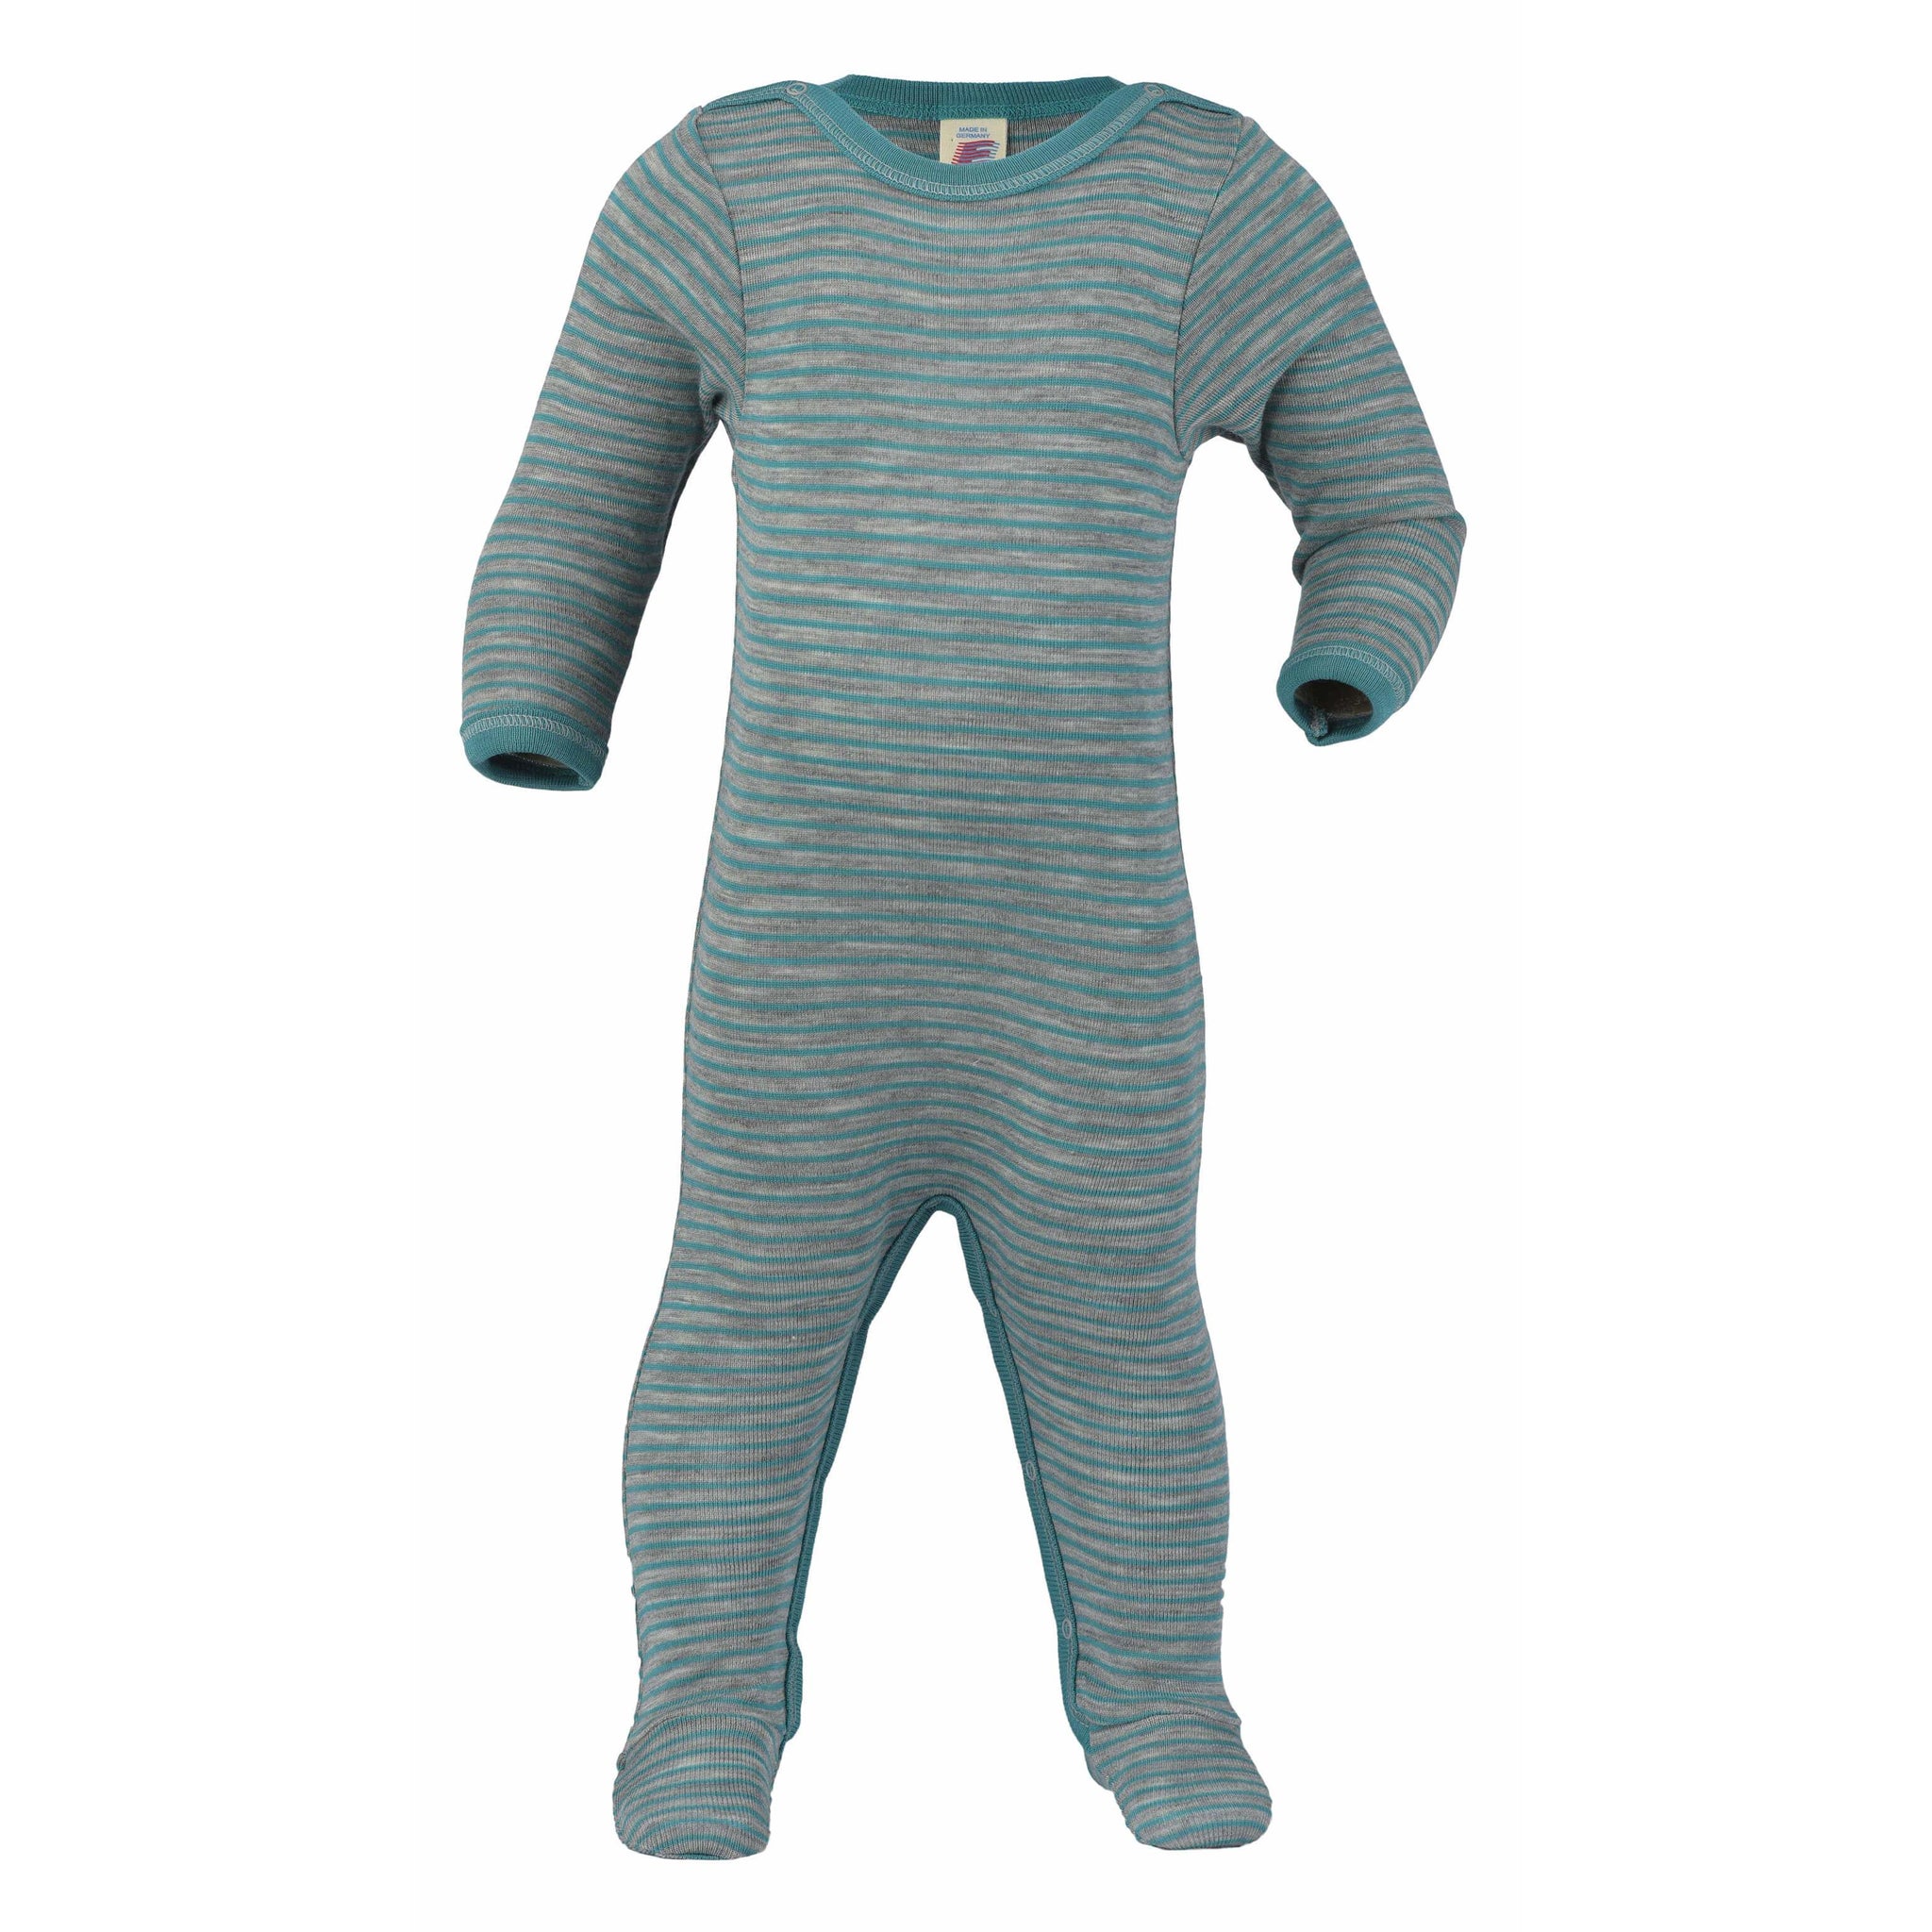 Pijamale calduroase pentru bebelusi din lana si matase, Engel 